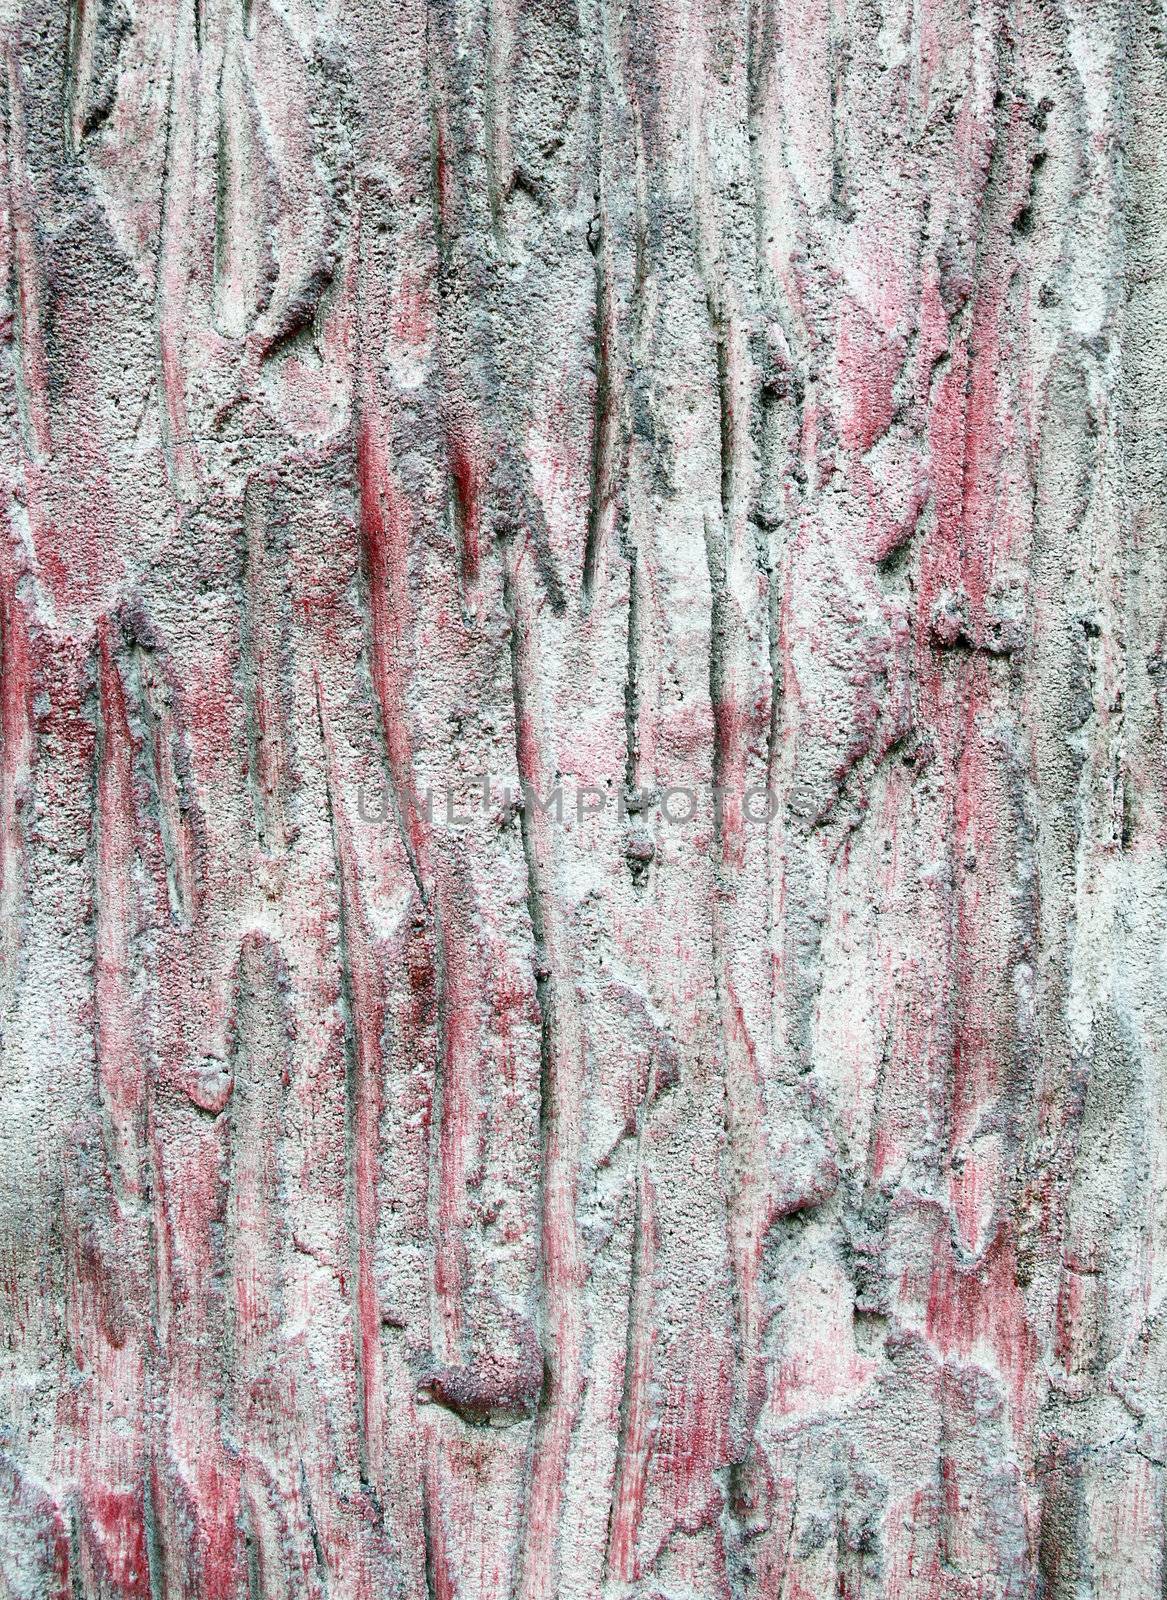 Texture of tree bark background closeup